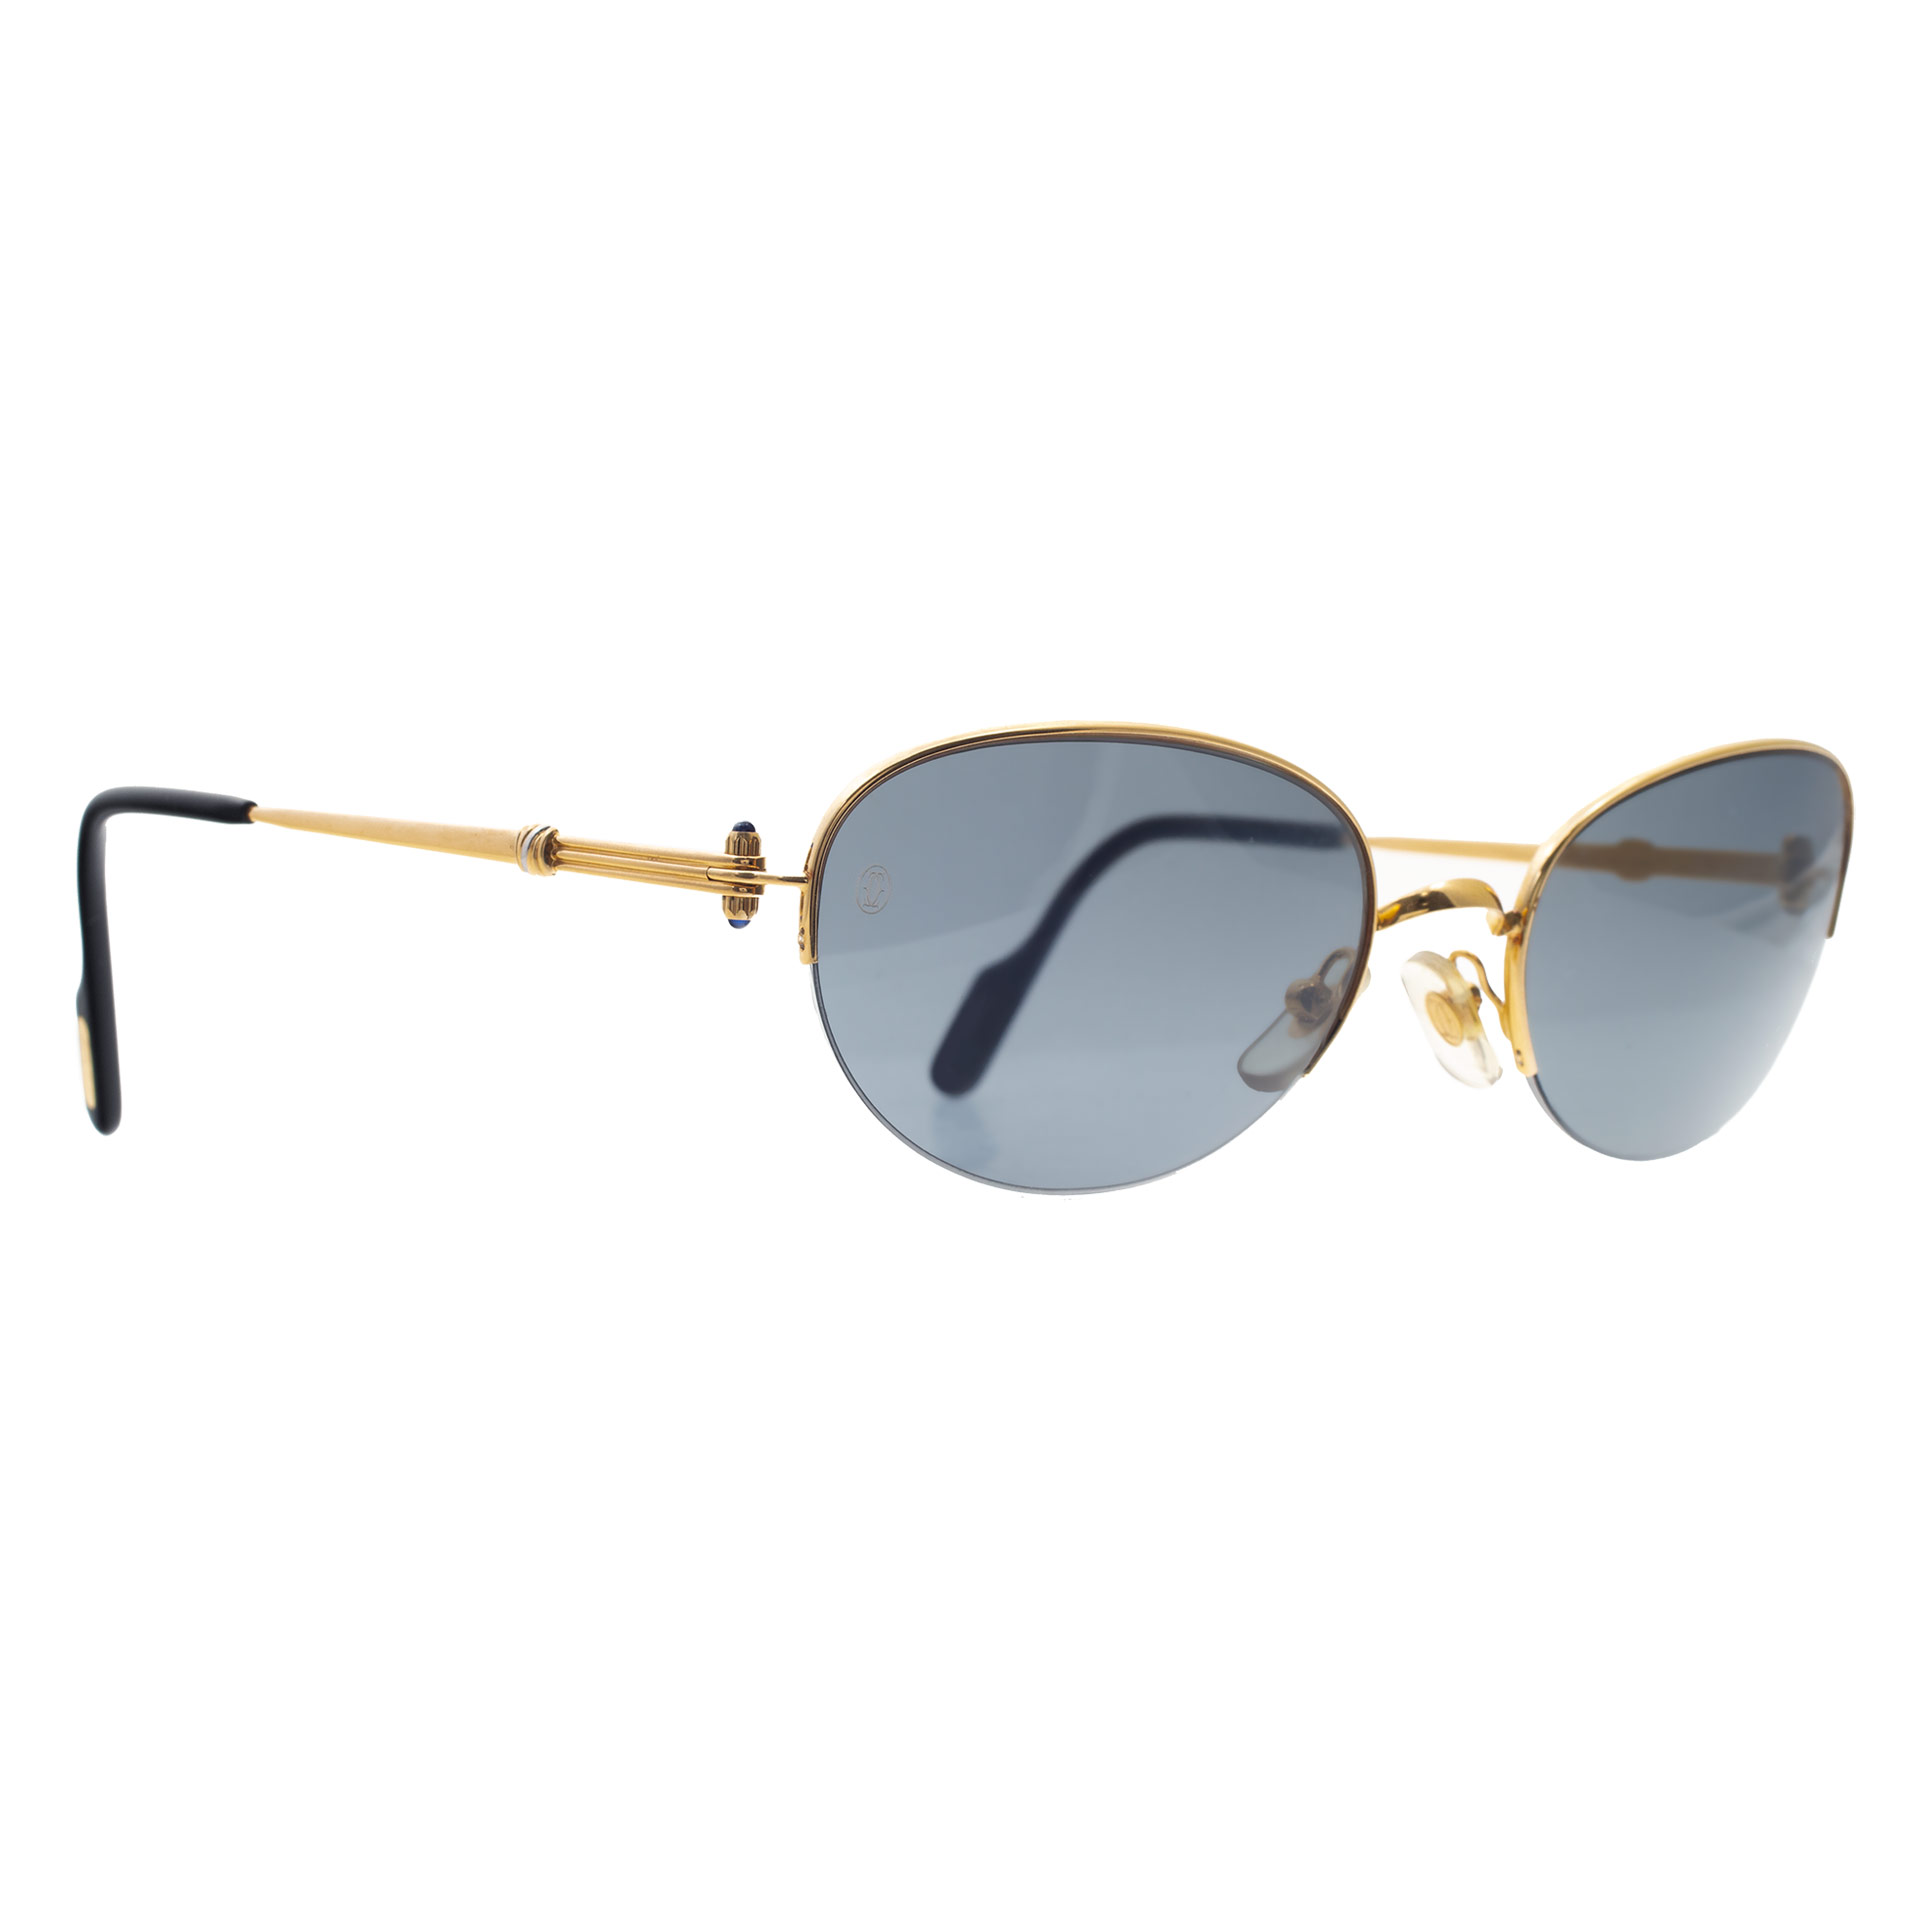 Cartier sunglasses image 2